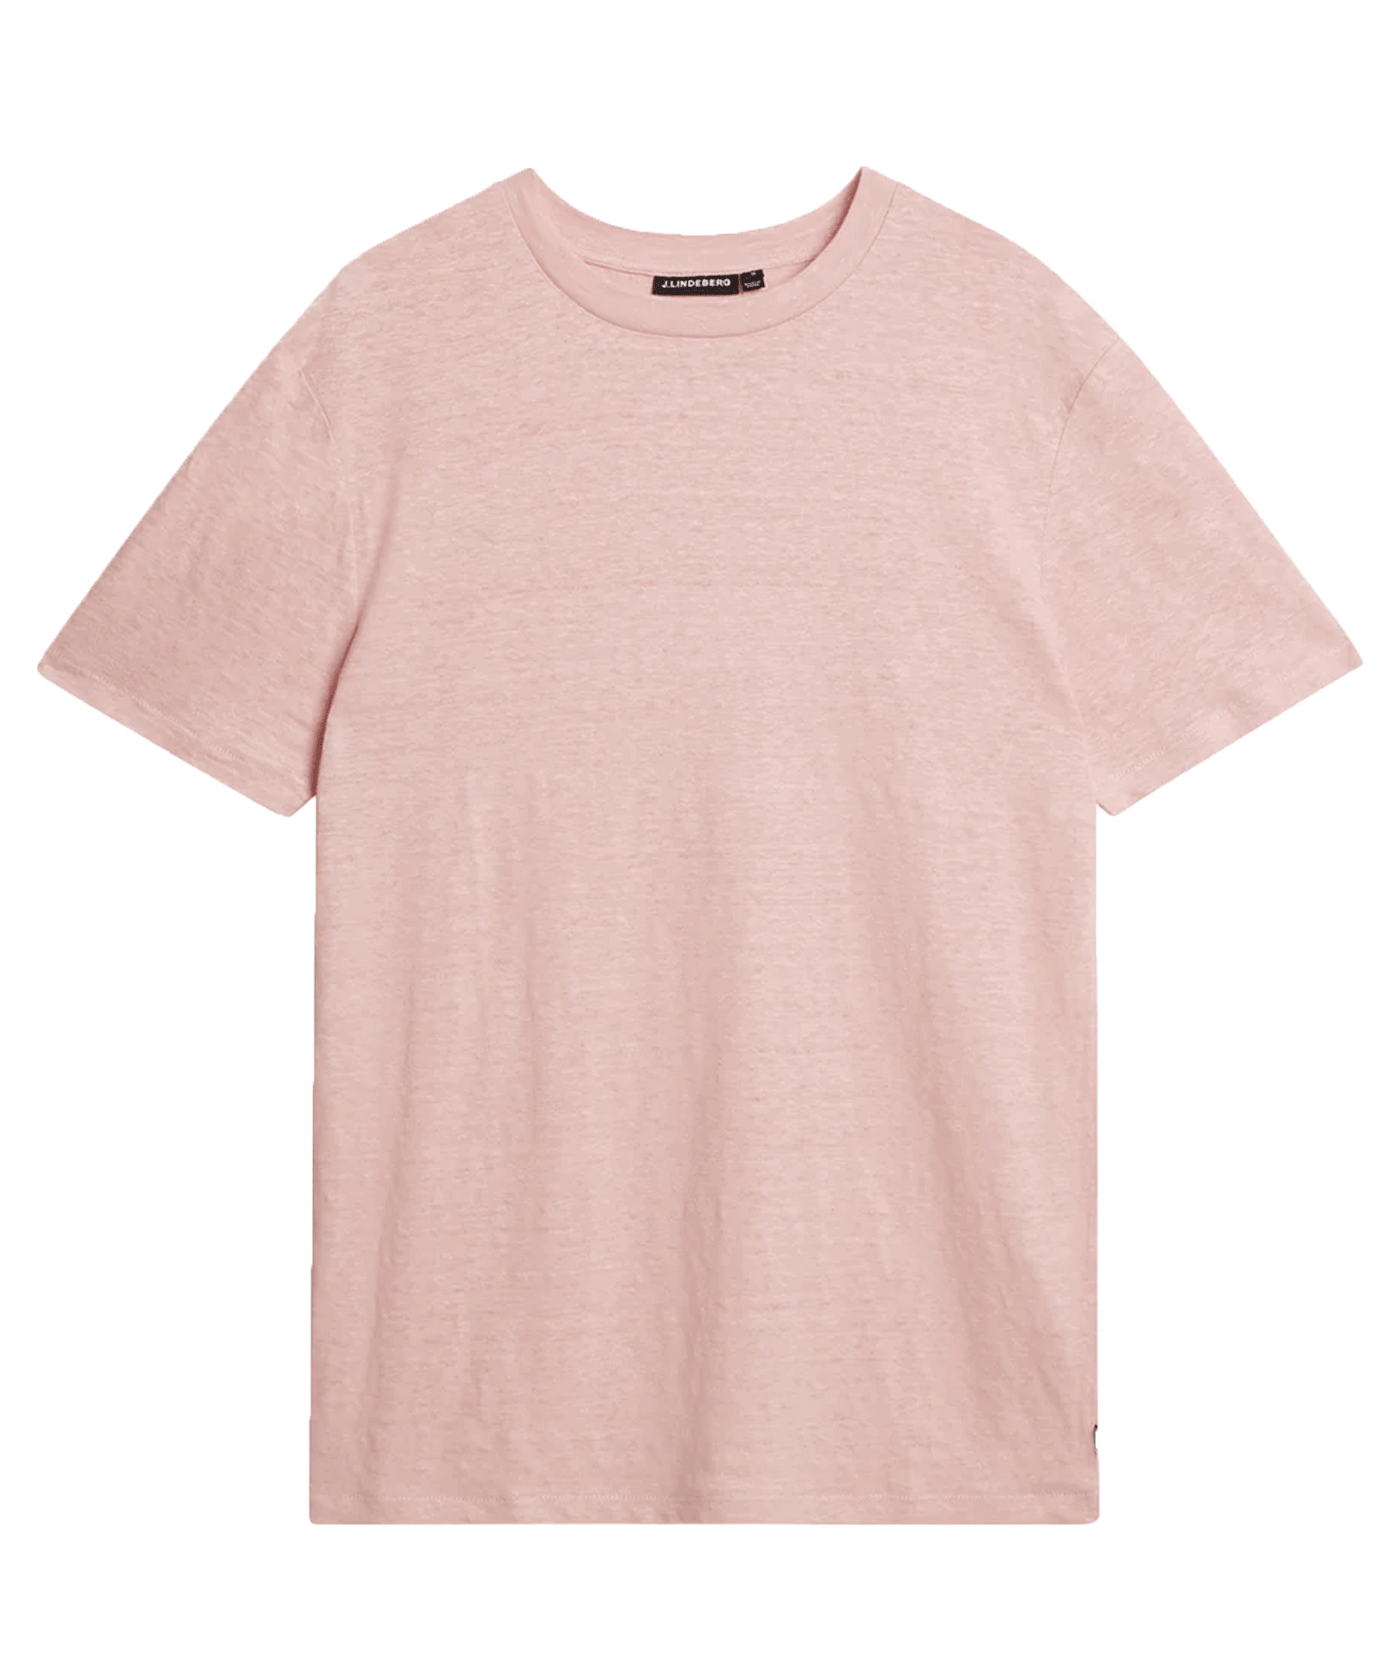 J Lindeberg - Coma Linen - T-shirt - S022 Powder Pink